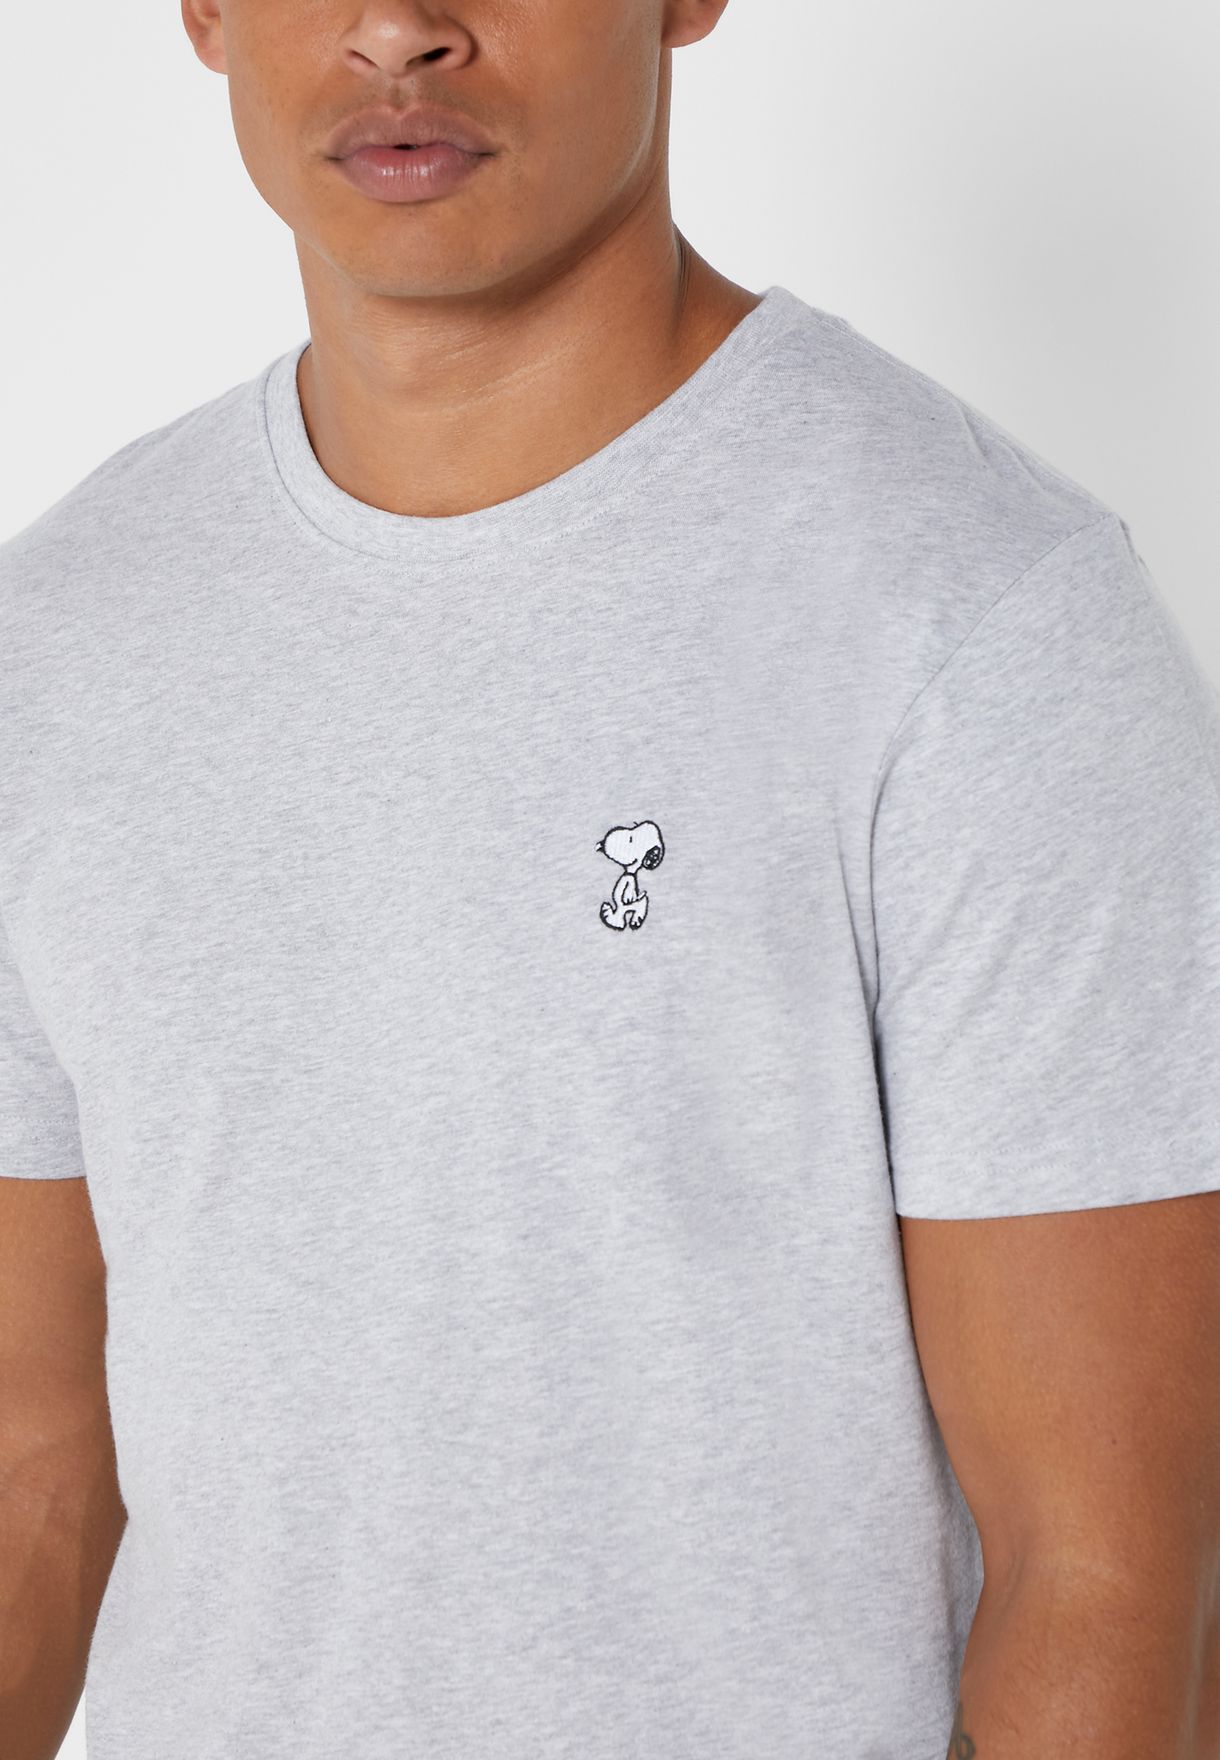 Stockholm Snoopy Crew Neck T-Shirt